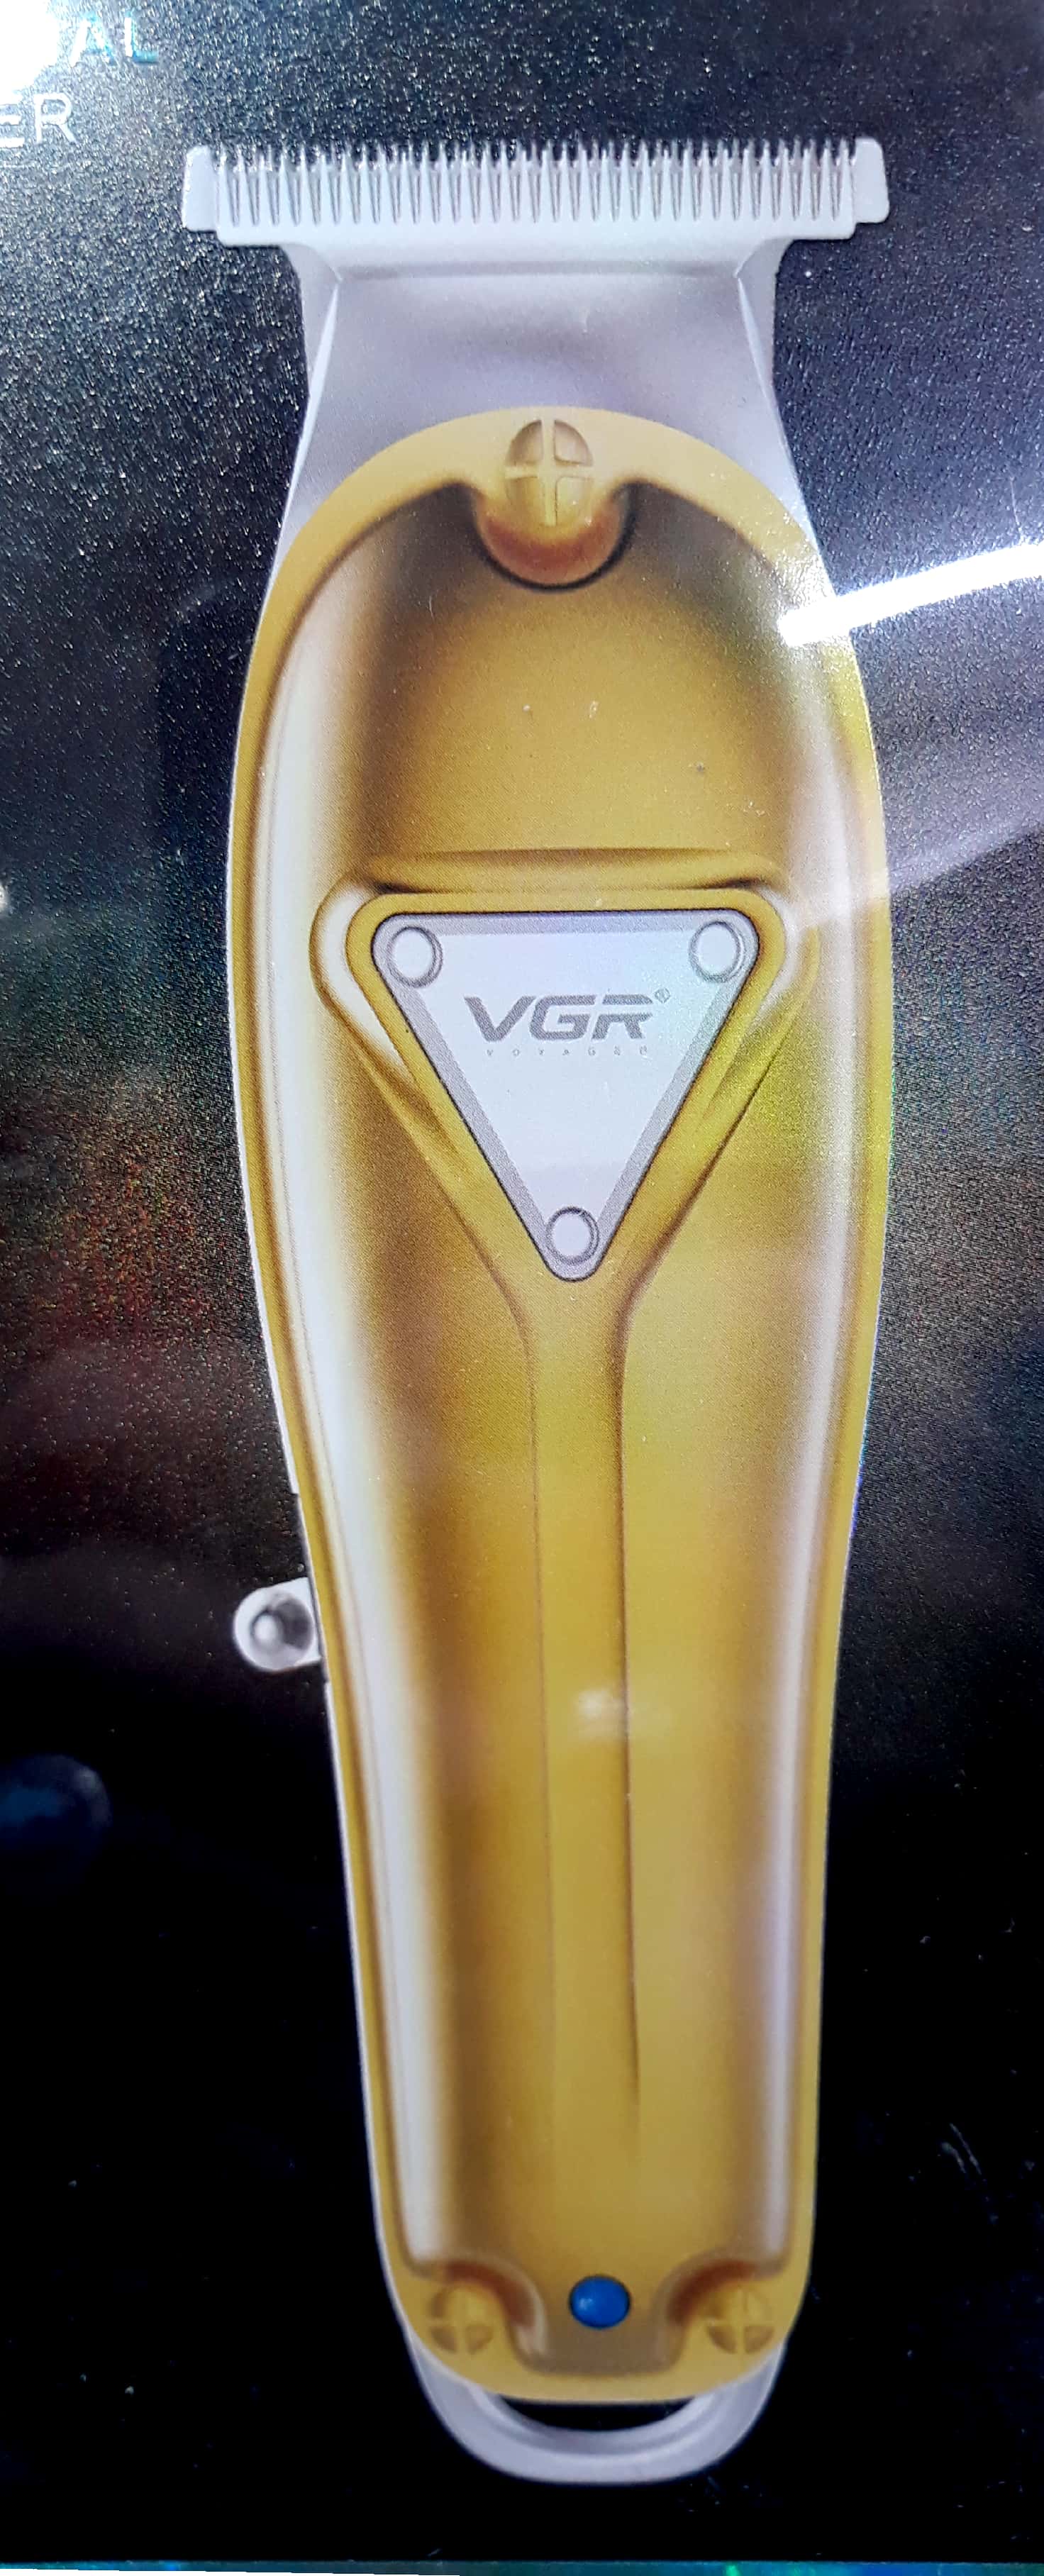 ماشین اصلاح VGR مدل 057